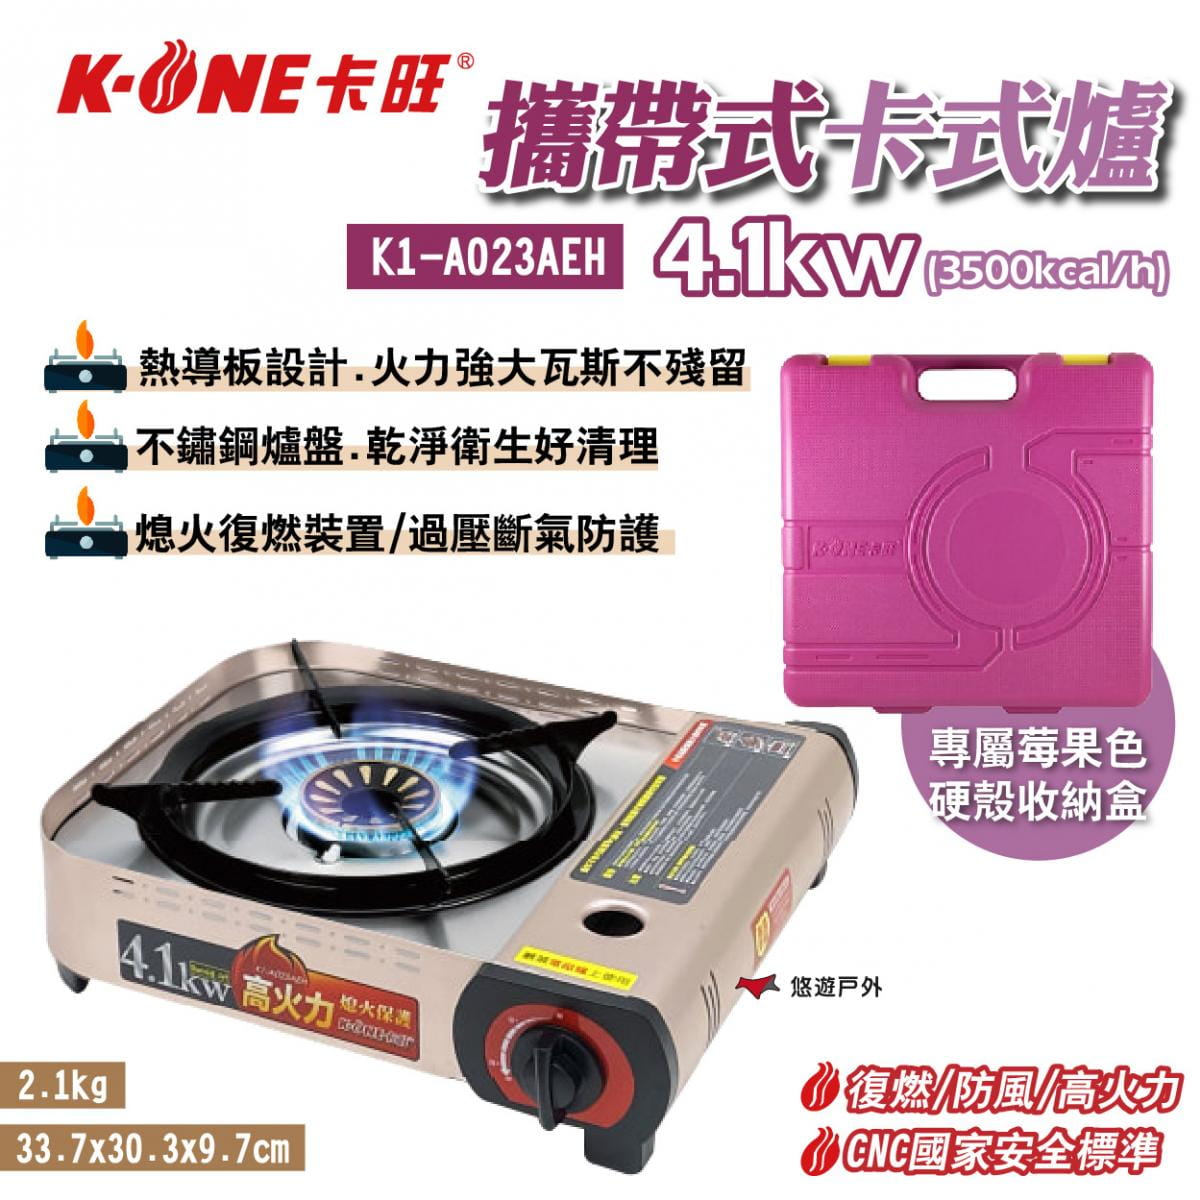 【K-ONE卡旺】攜帶式卡式爐4.1kw K1-A023AEH 悠遊戶外 1